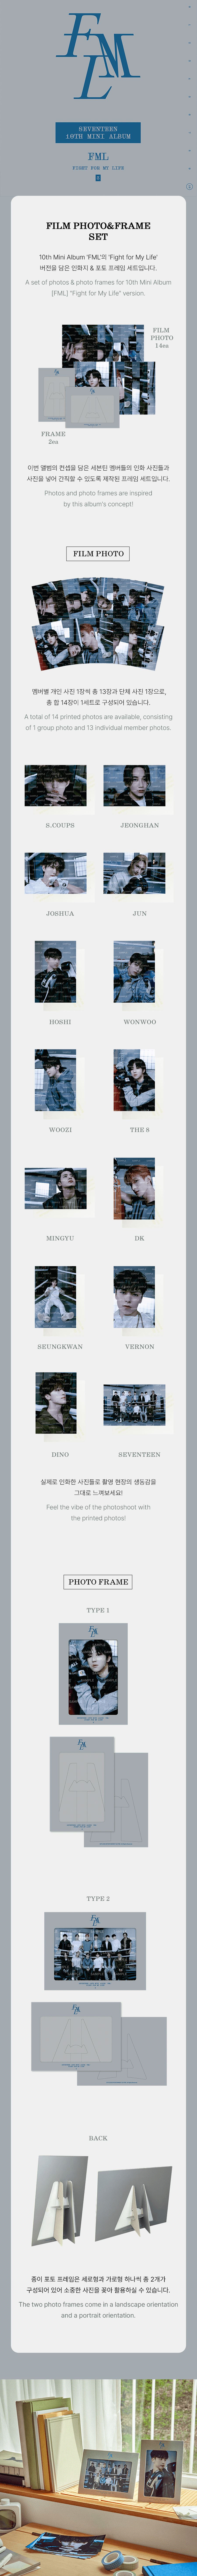 seventeen-10th-mini-album-film-photo-frame-set-wholesales